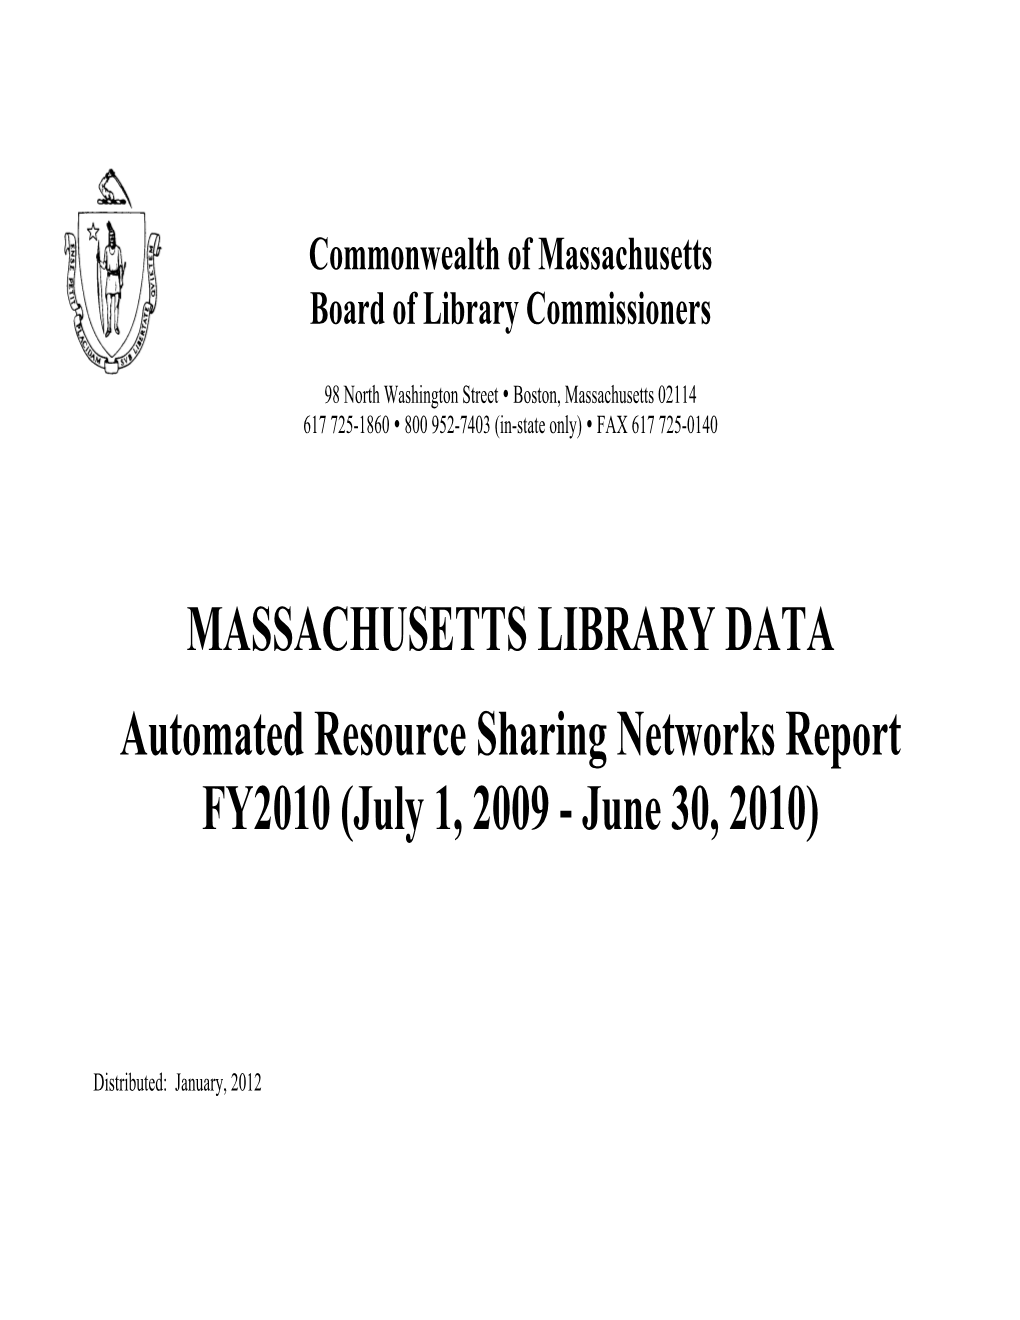 MASSACHUSETTS LIBRARY DATA Automated Resource Sharing